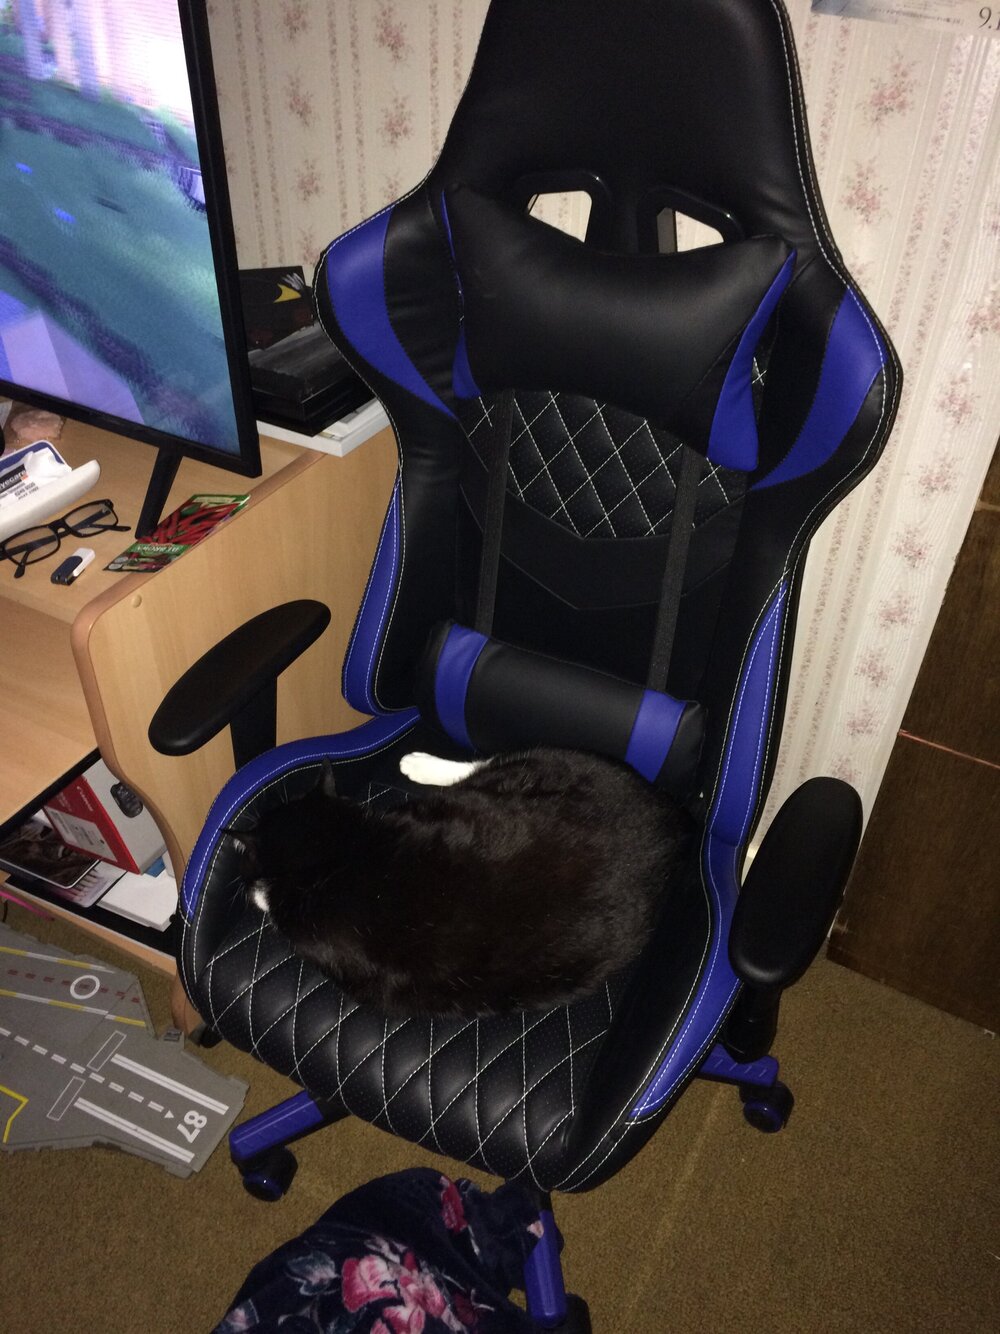 kitty gaming chair.JPG